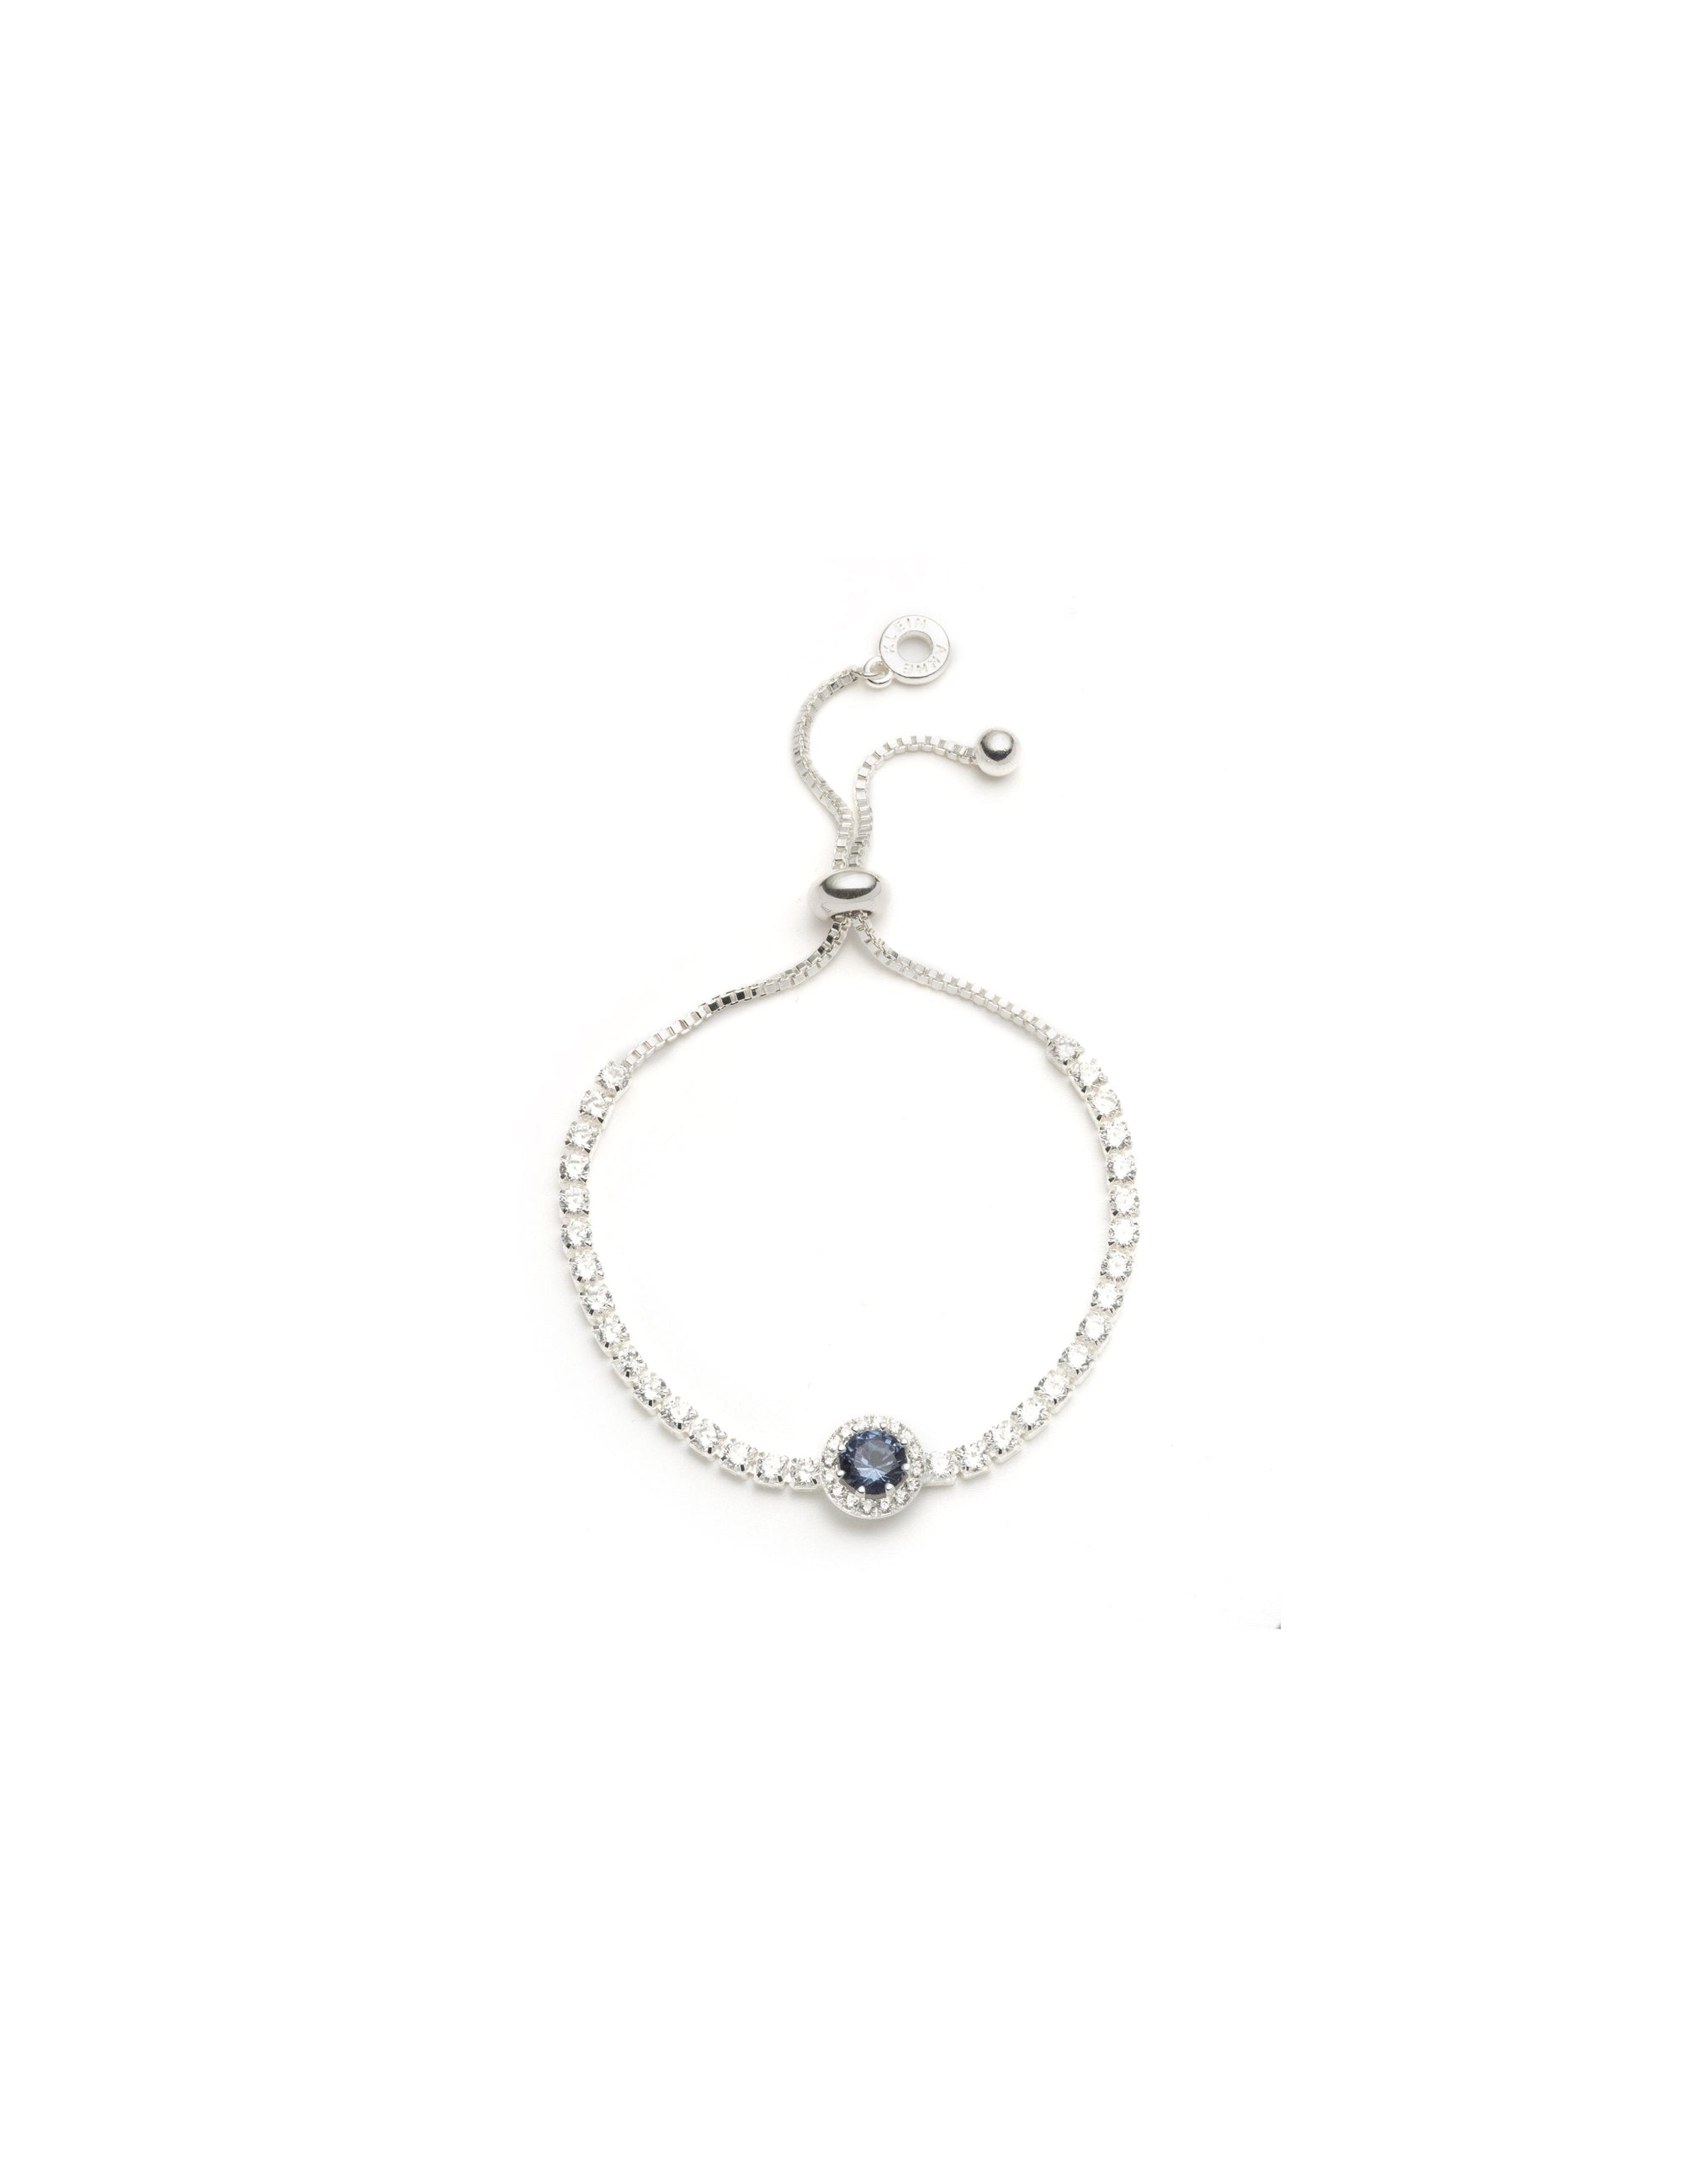 silver tone halo center stone slider bracelet with denim blue stone